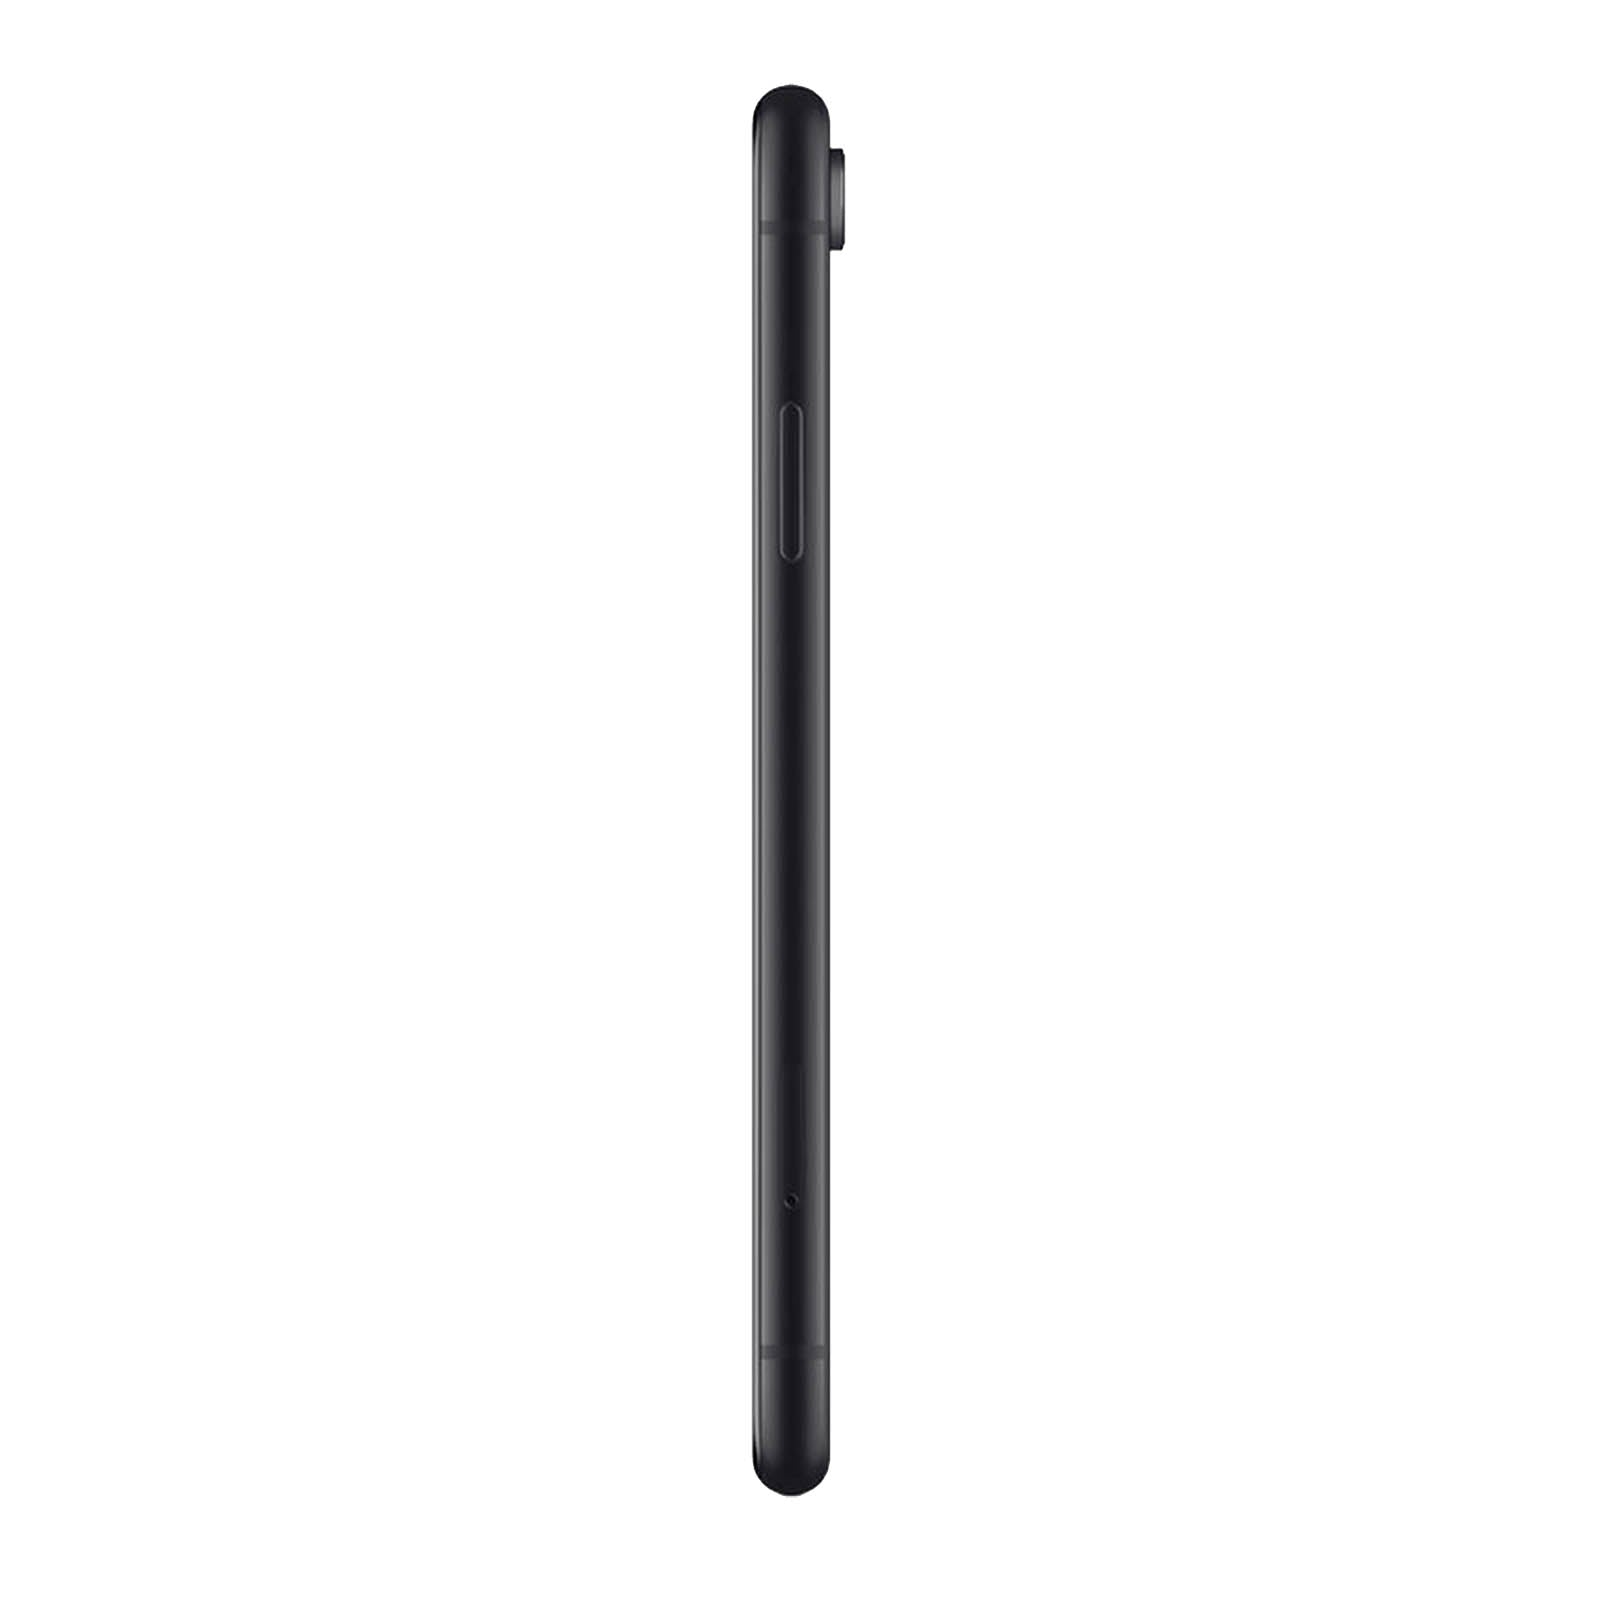 Apple iPhone XR 64GB Black Fair - Unlocked